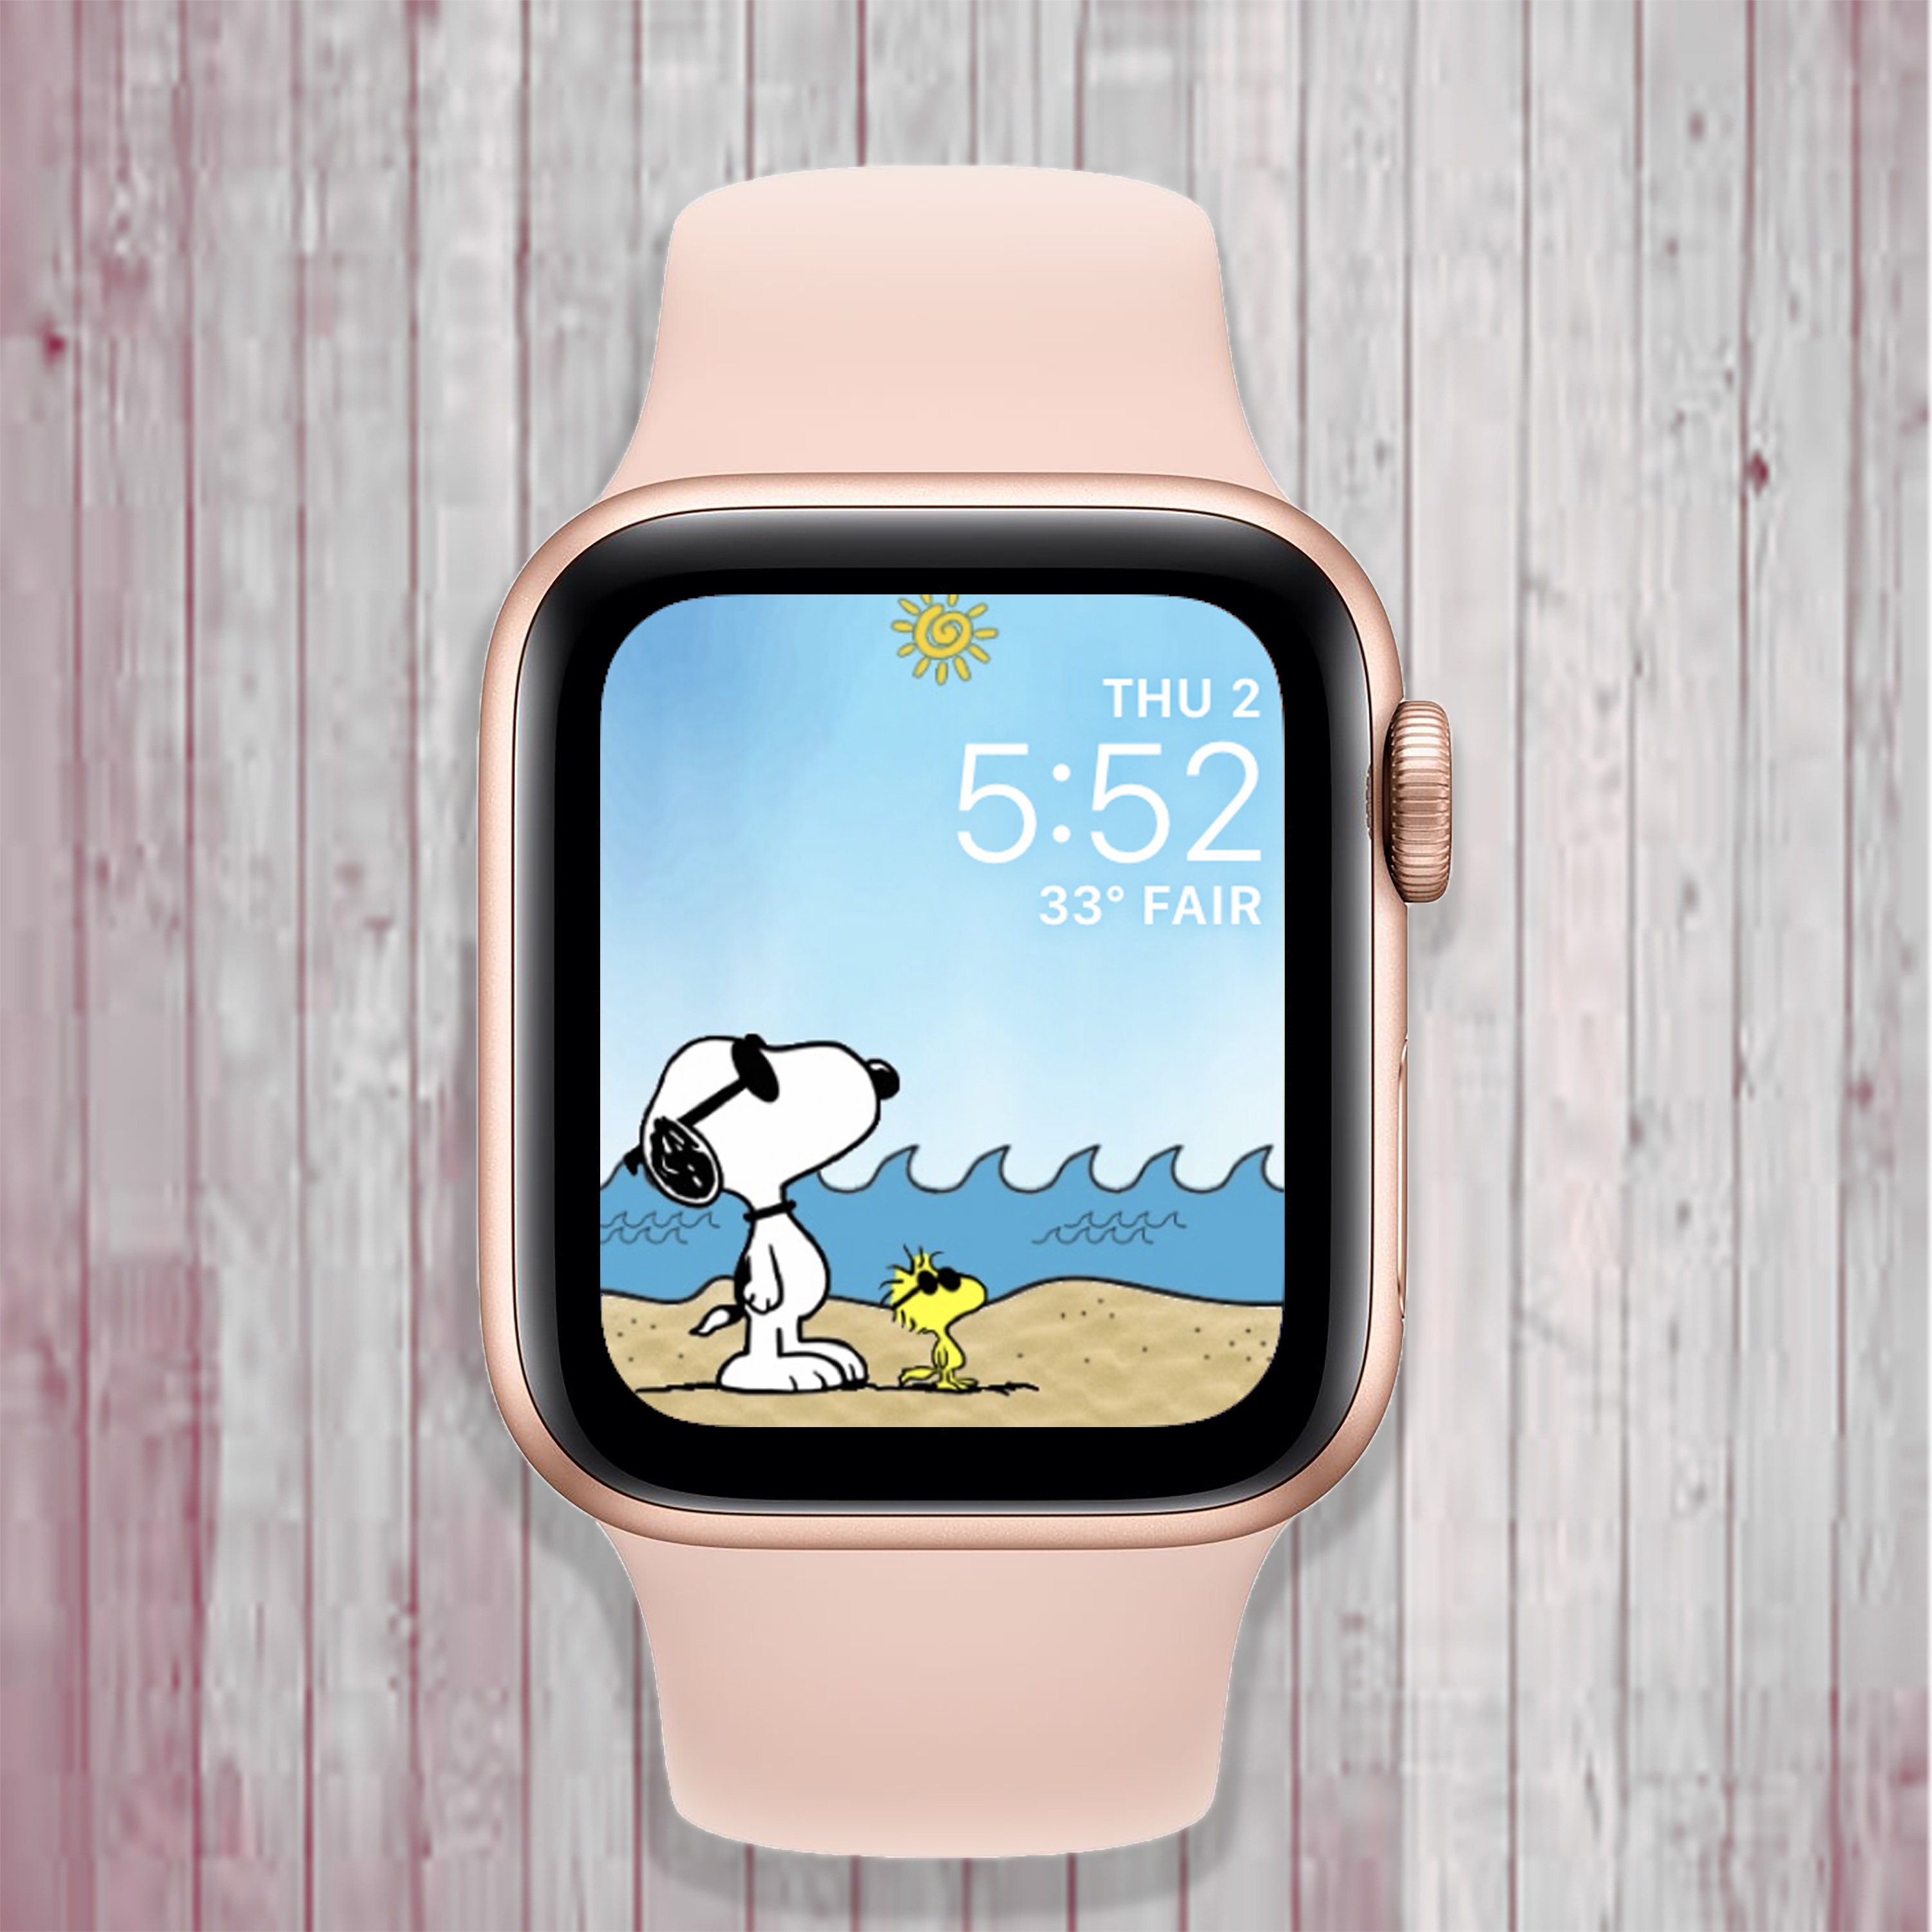 Peanuts Snoopy & Woodstock Apple Watch Wallpaper suitable | Etsy